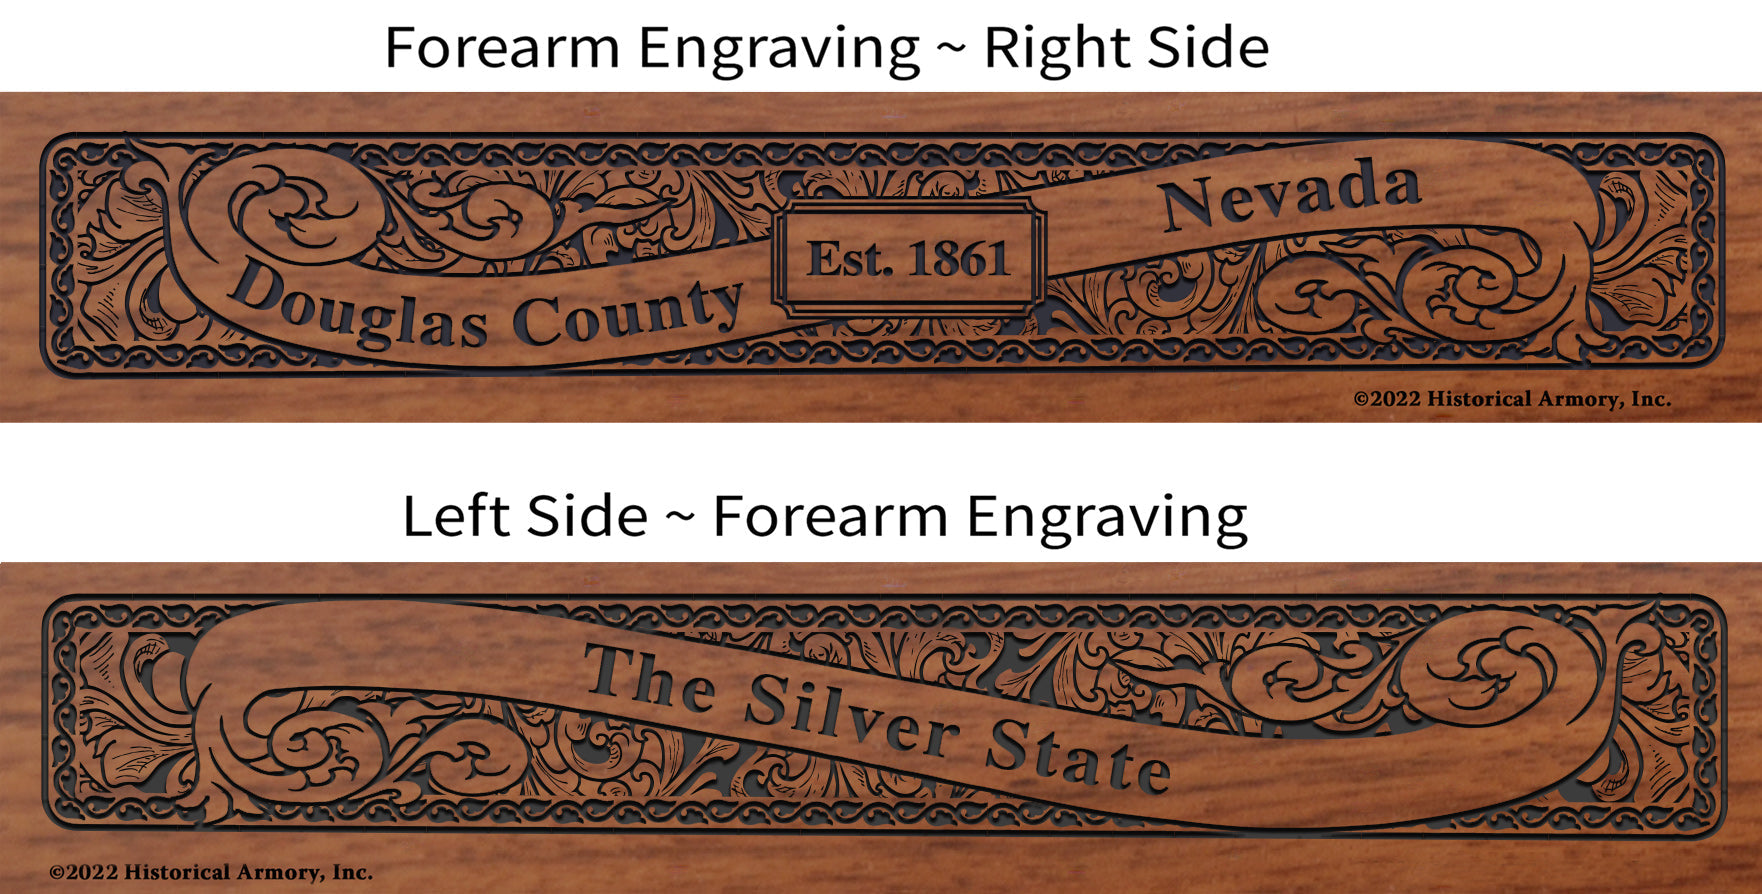 Douglas County Nevada Engraved Rifle Forearm